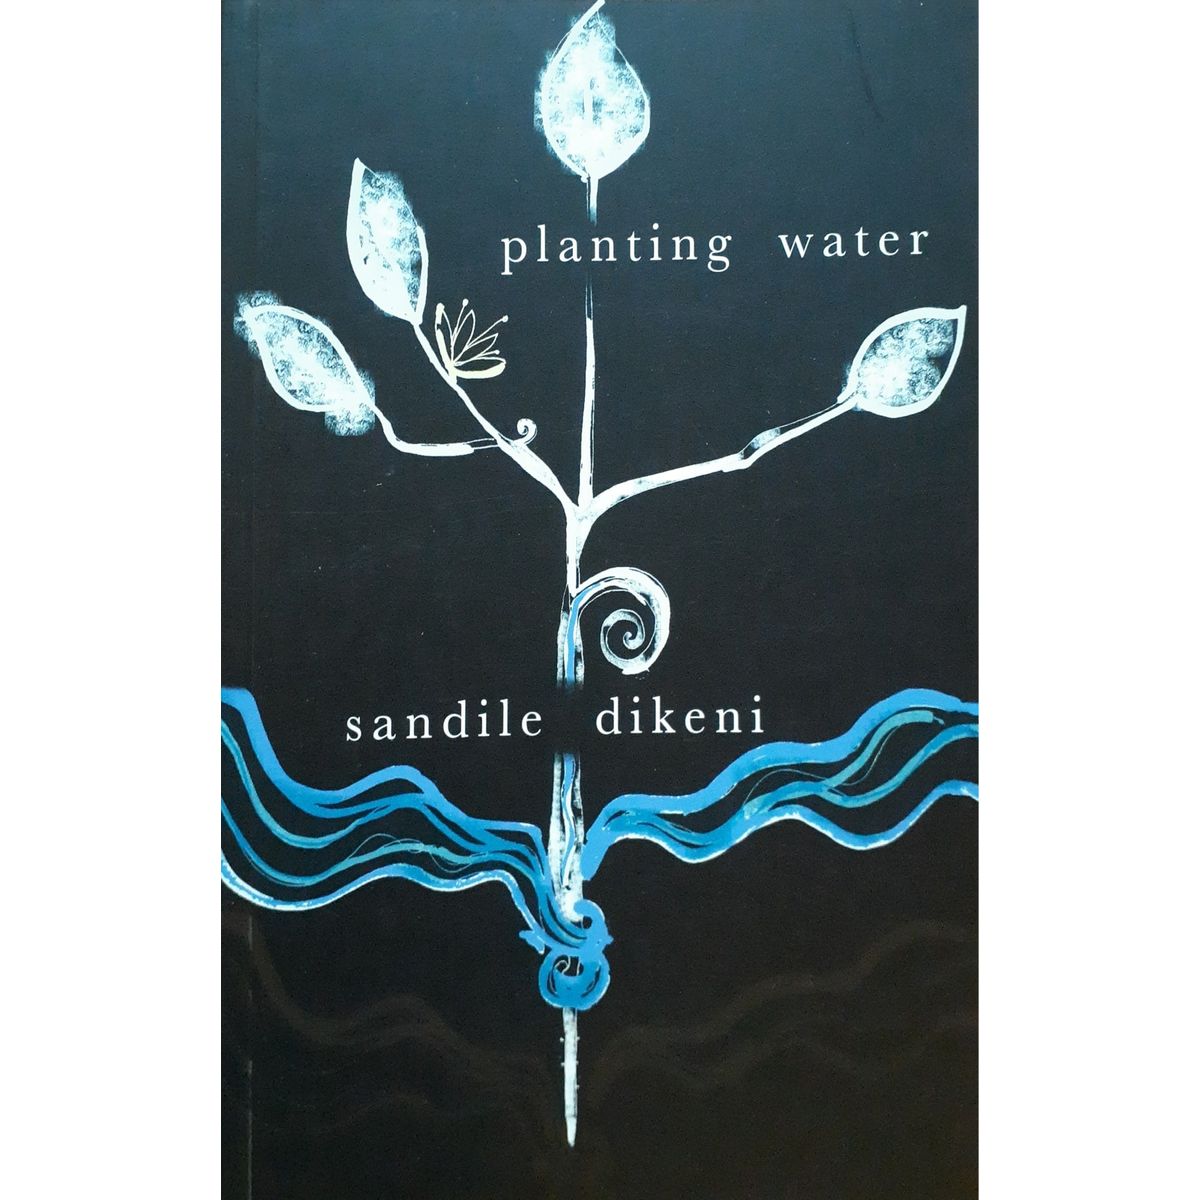 ISBN: 9781869141226 / 1869141229 - Planting Water by Sandile Dikeni [2007]